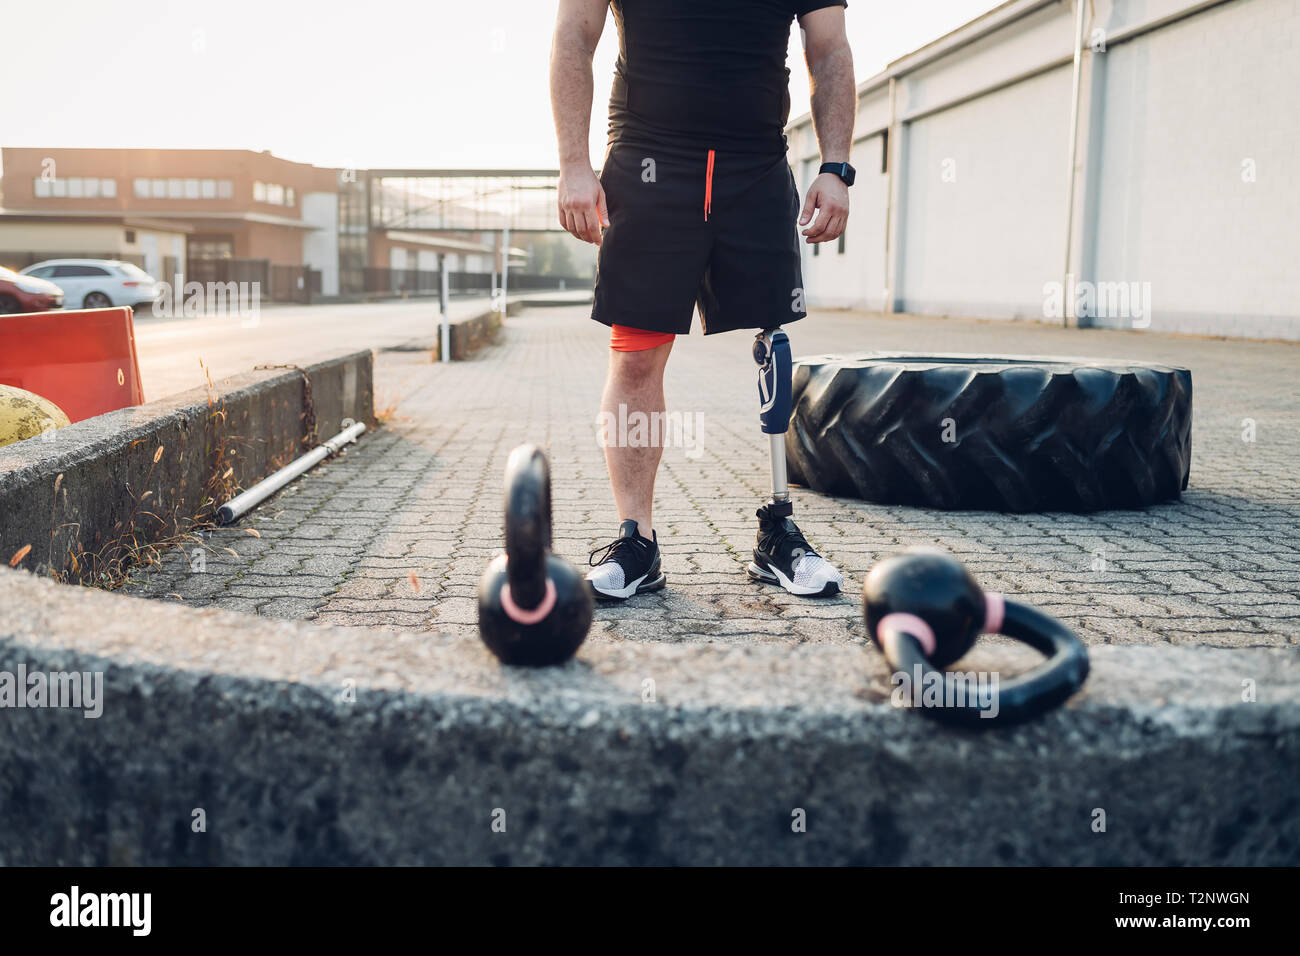 Man with prosthetic leg beside training tyre and kettlebells Stock Photo